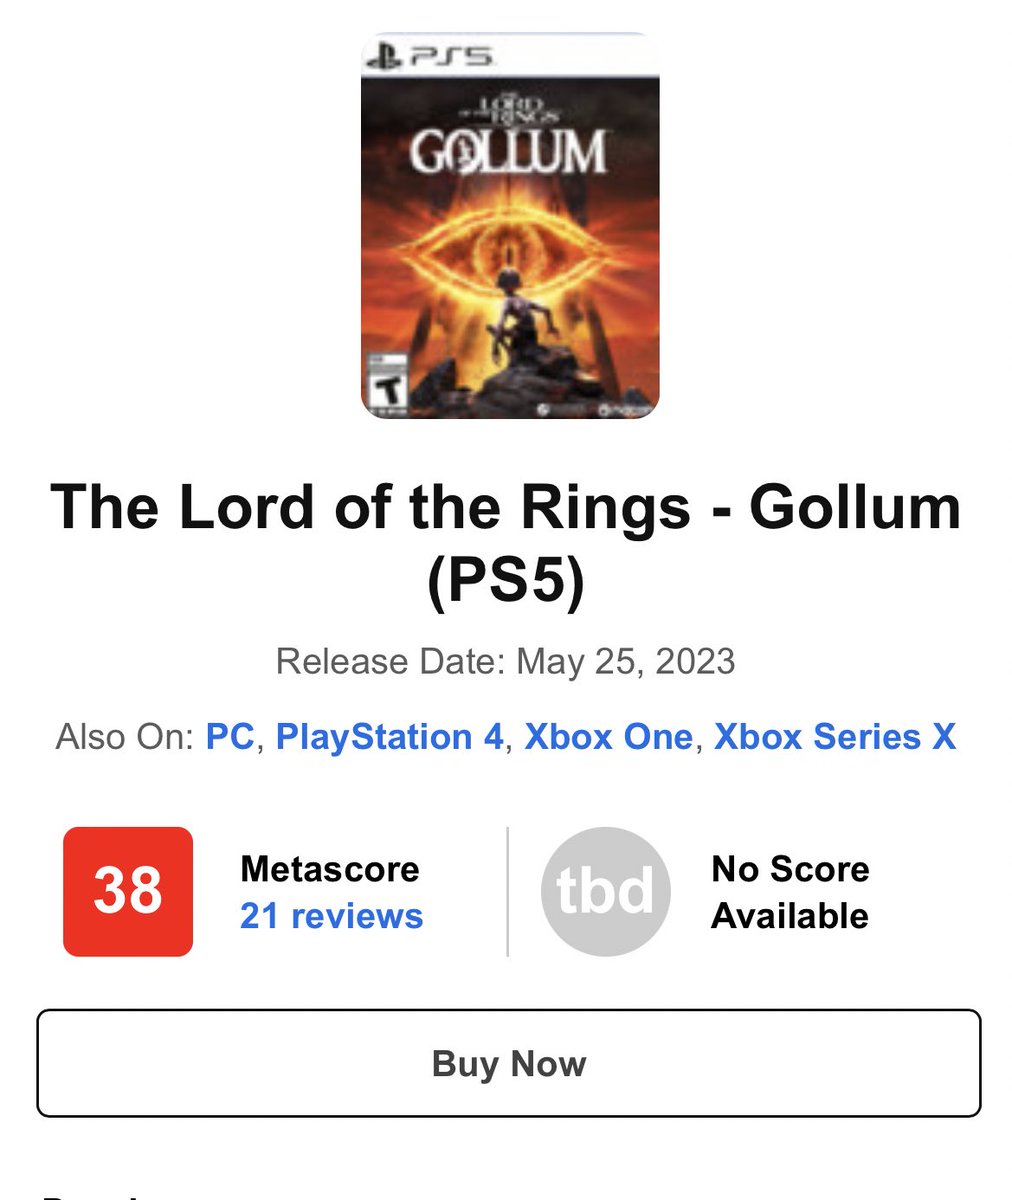 The Lord of the Rings Gollum’un inceleme puanları:

MetaCritic 38/100
OpenCritic 39/100
Gamespot 2/10
Shacknews 6/10
Push Square 2/10
PCGamesN 3/10